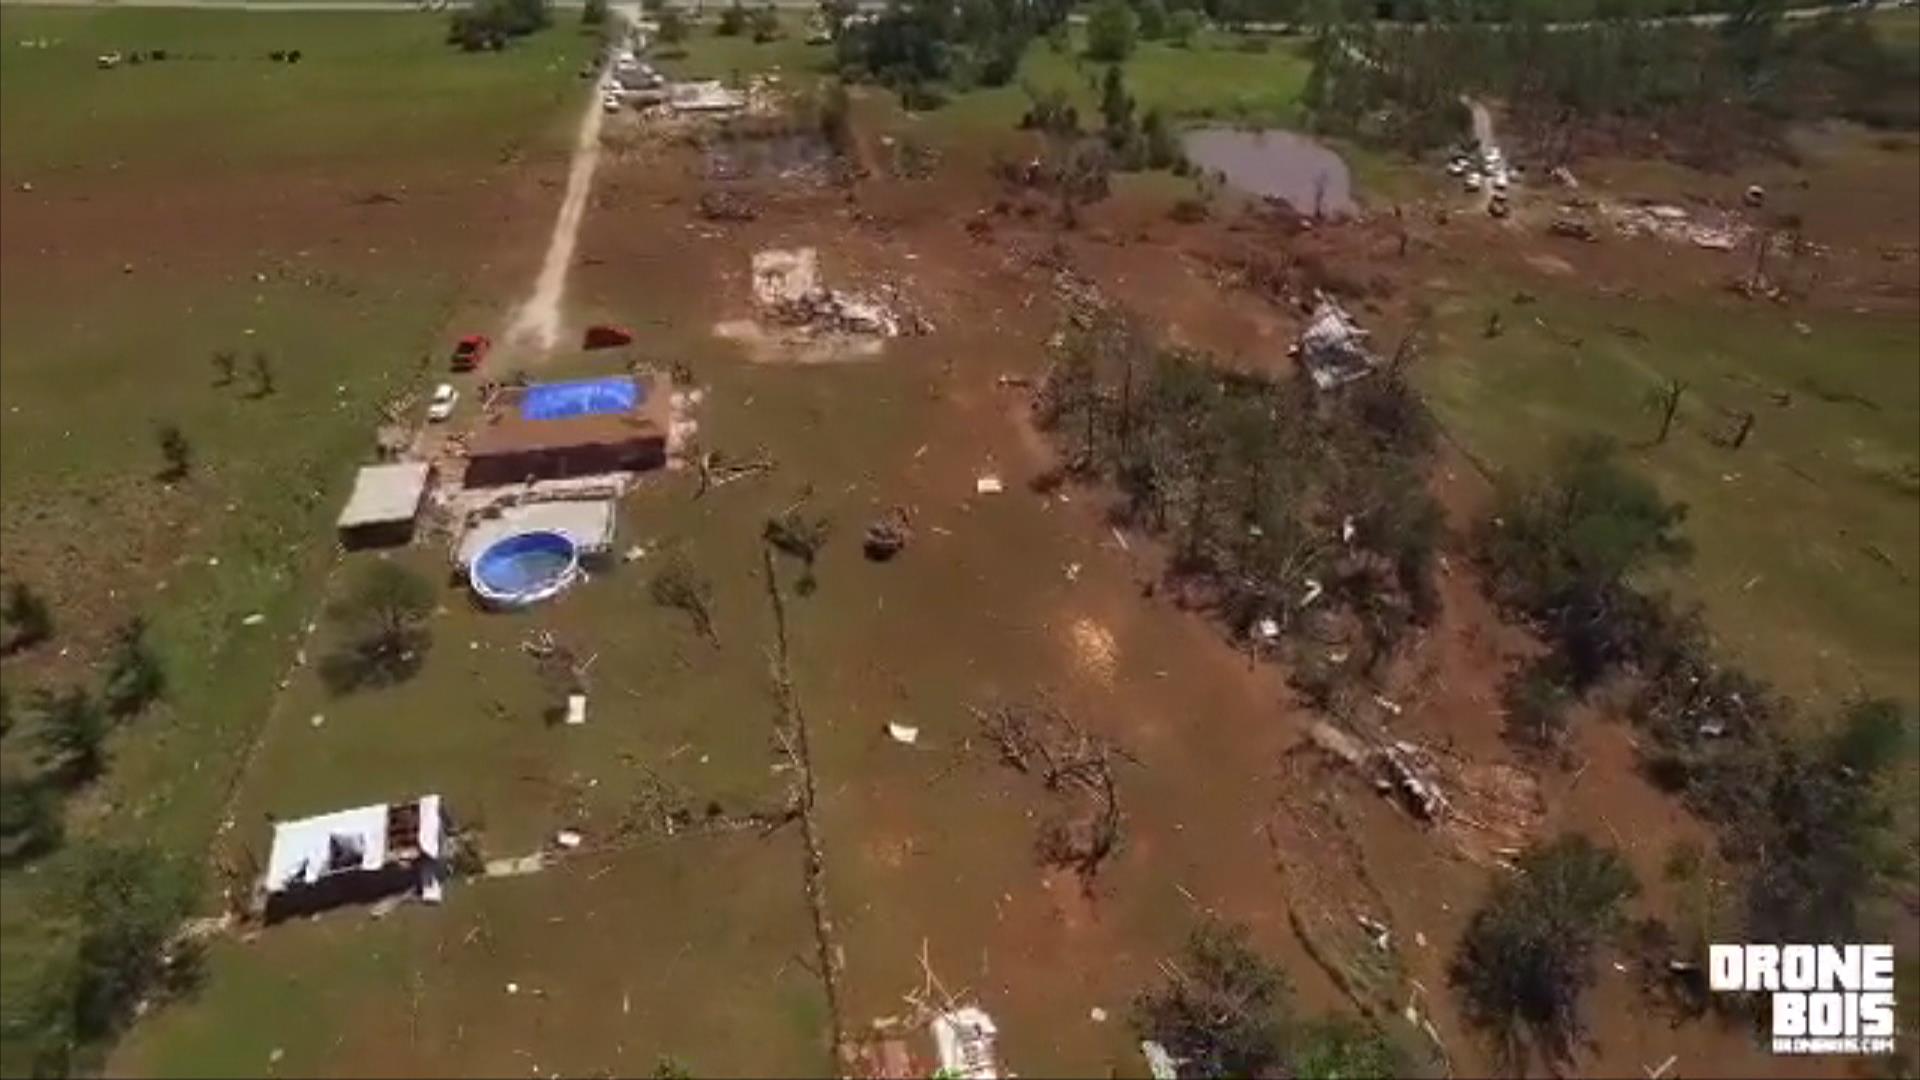 Drone Video Shows Tornado's Damage1920 x 1080